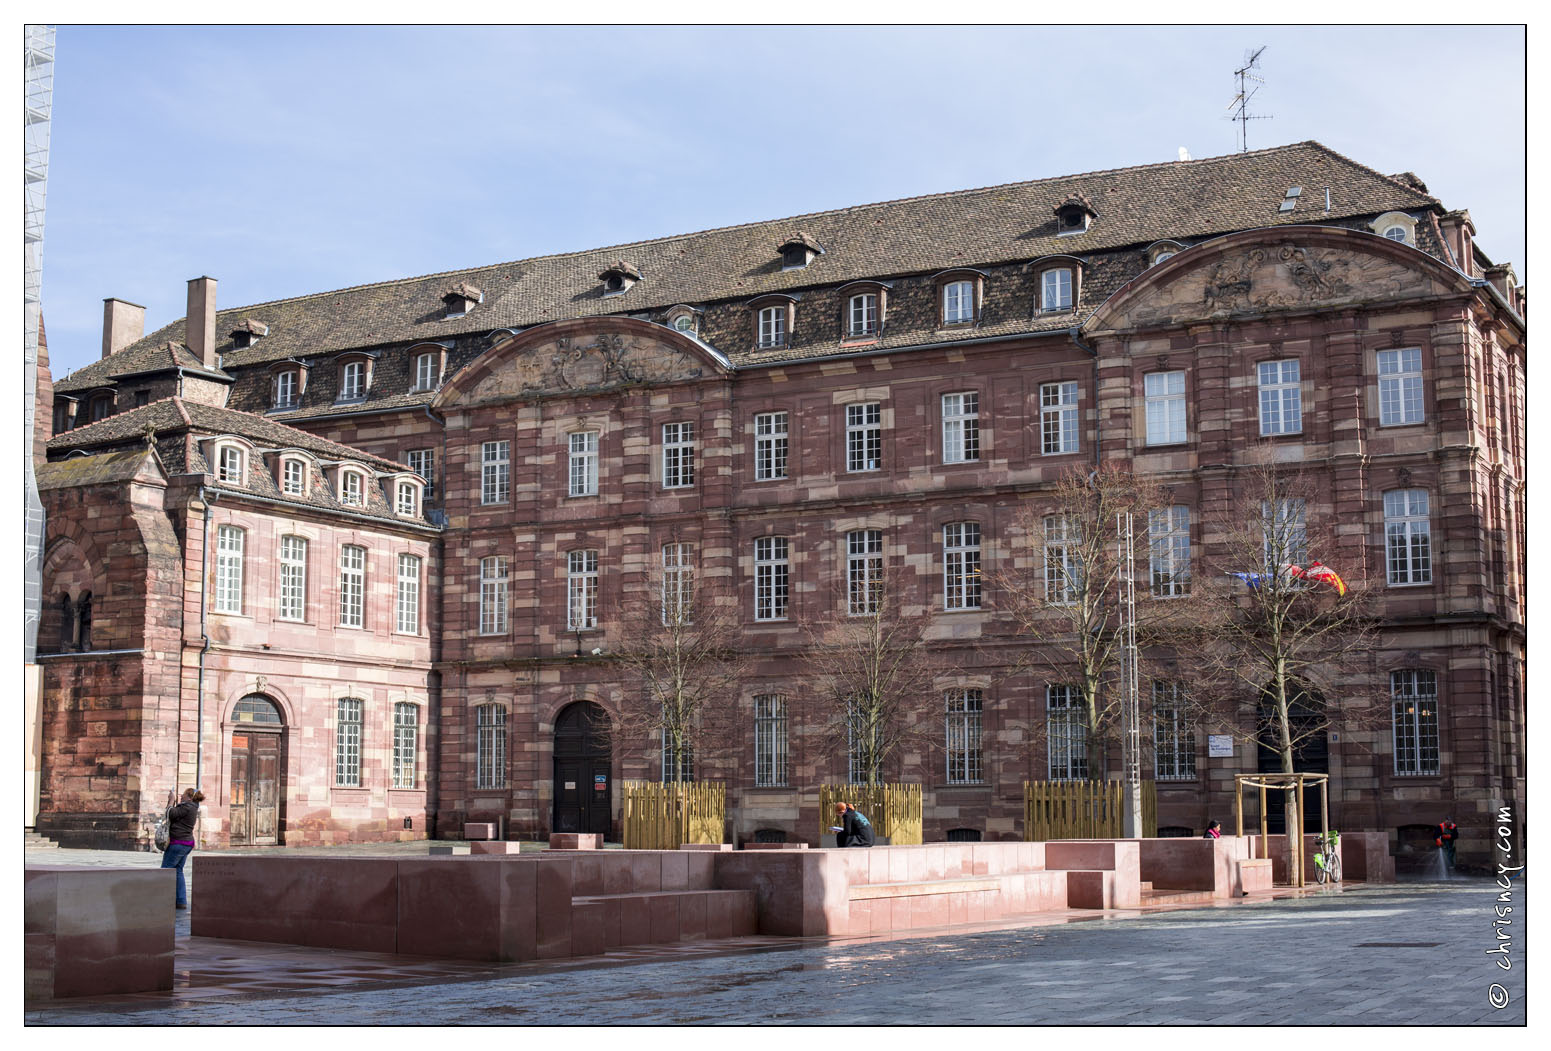 20140311-30_8162-Strasbourg_Lycee_ancien_college_royal_Place_du_Chateau.jpg